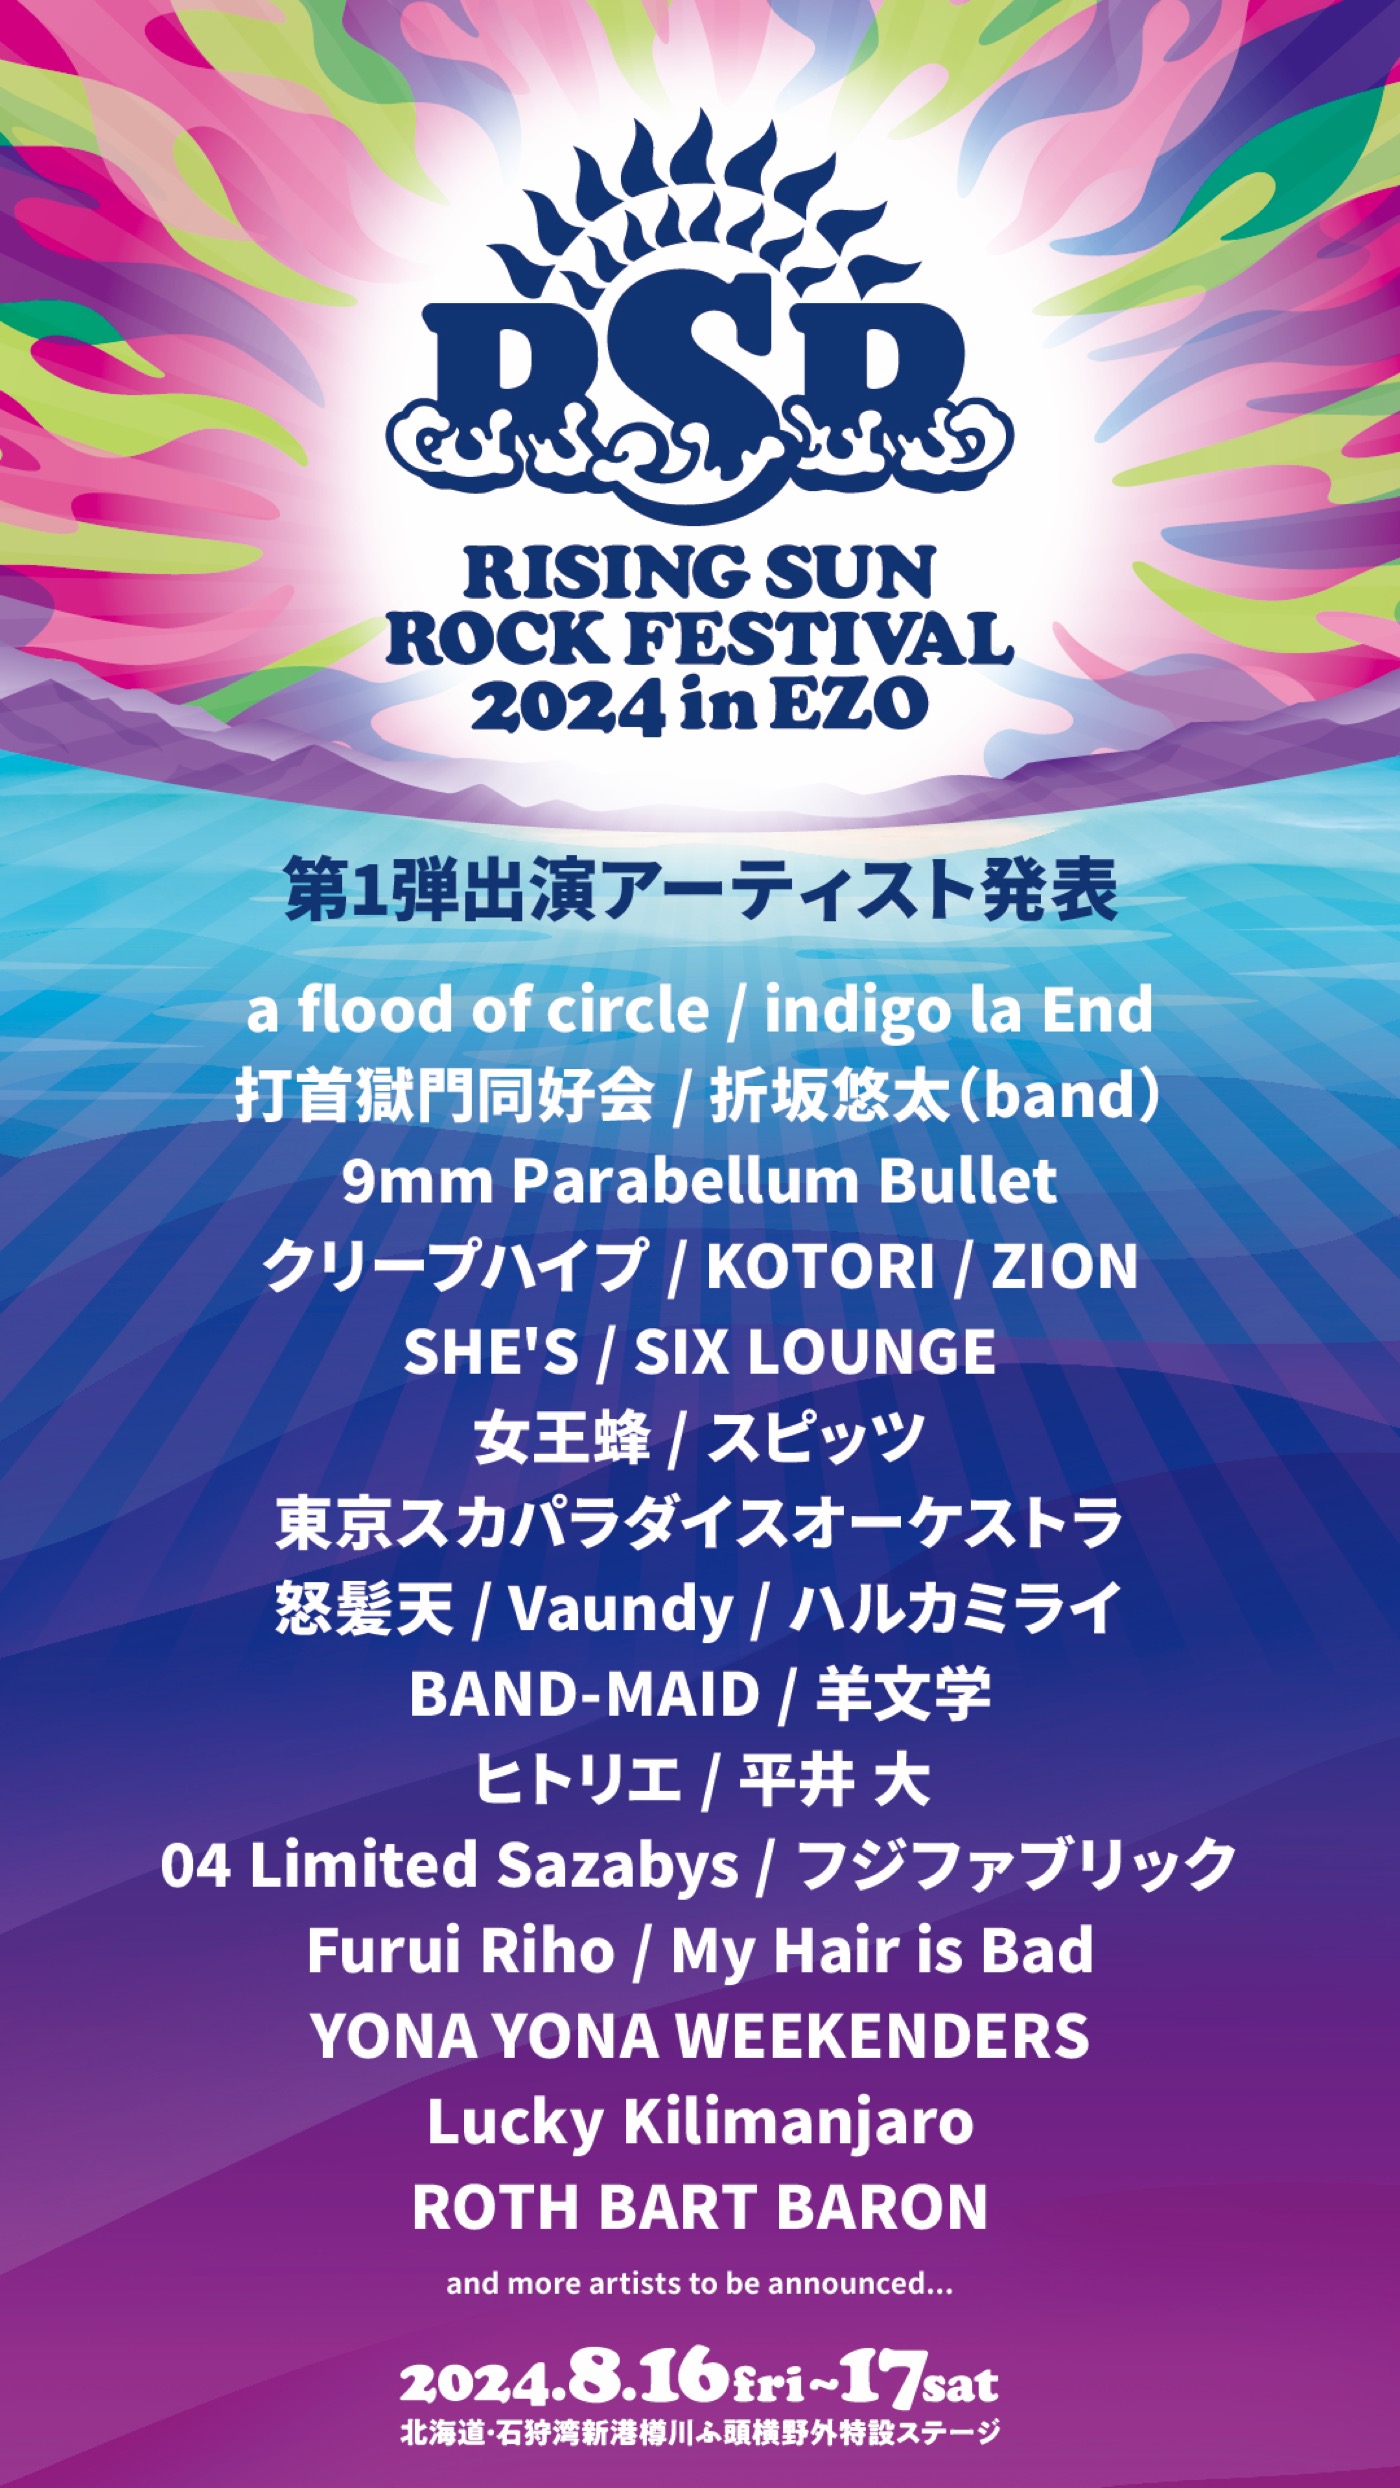 『RISING SUN ROCK FESTIVAL 2024 in EZO』に、21年ぶりの参加となるスピッツの出演が決定